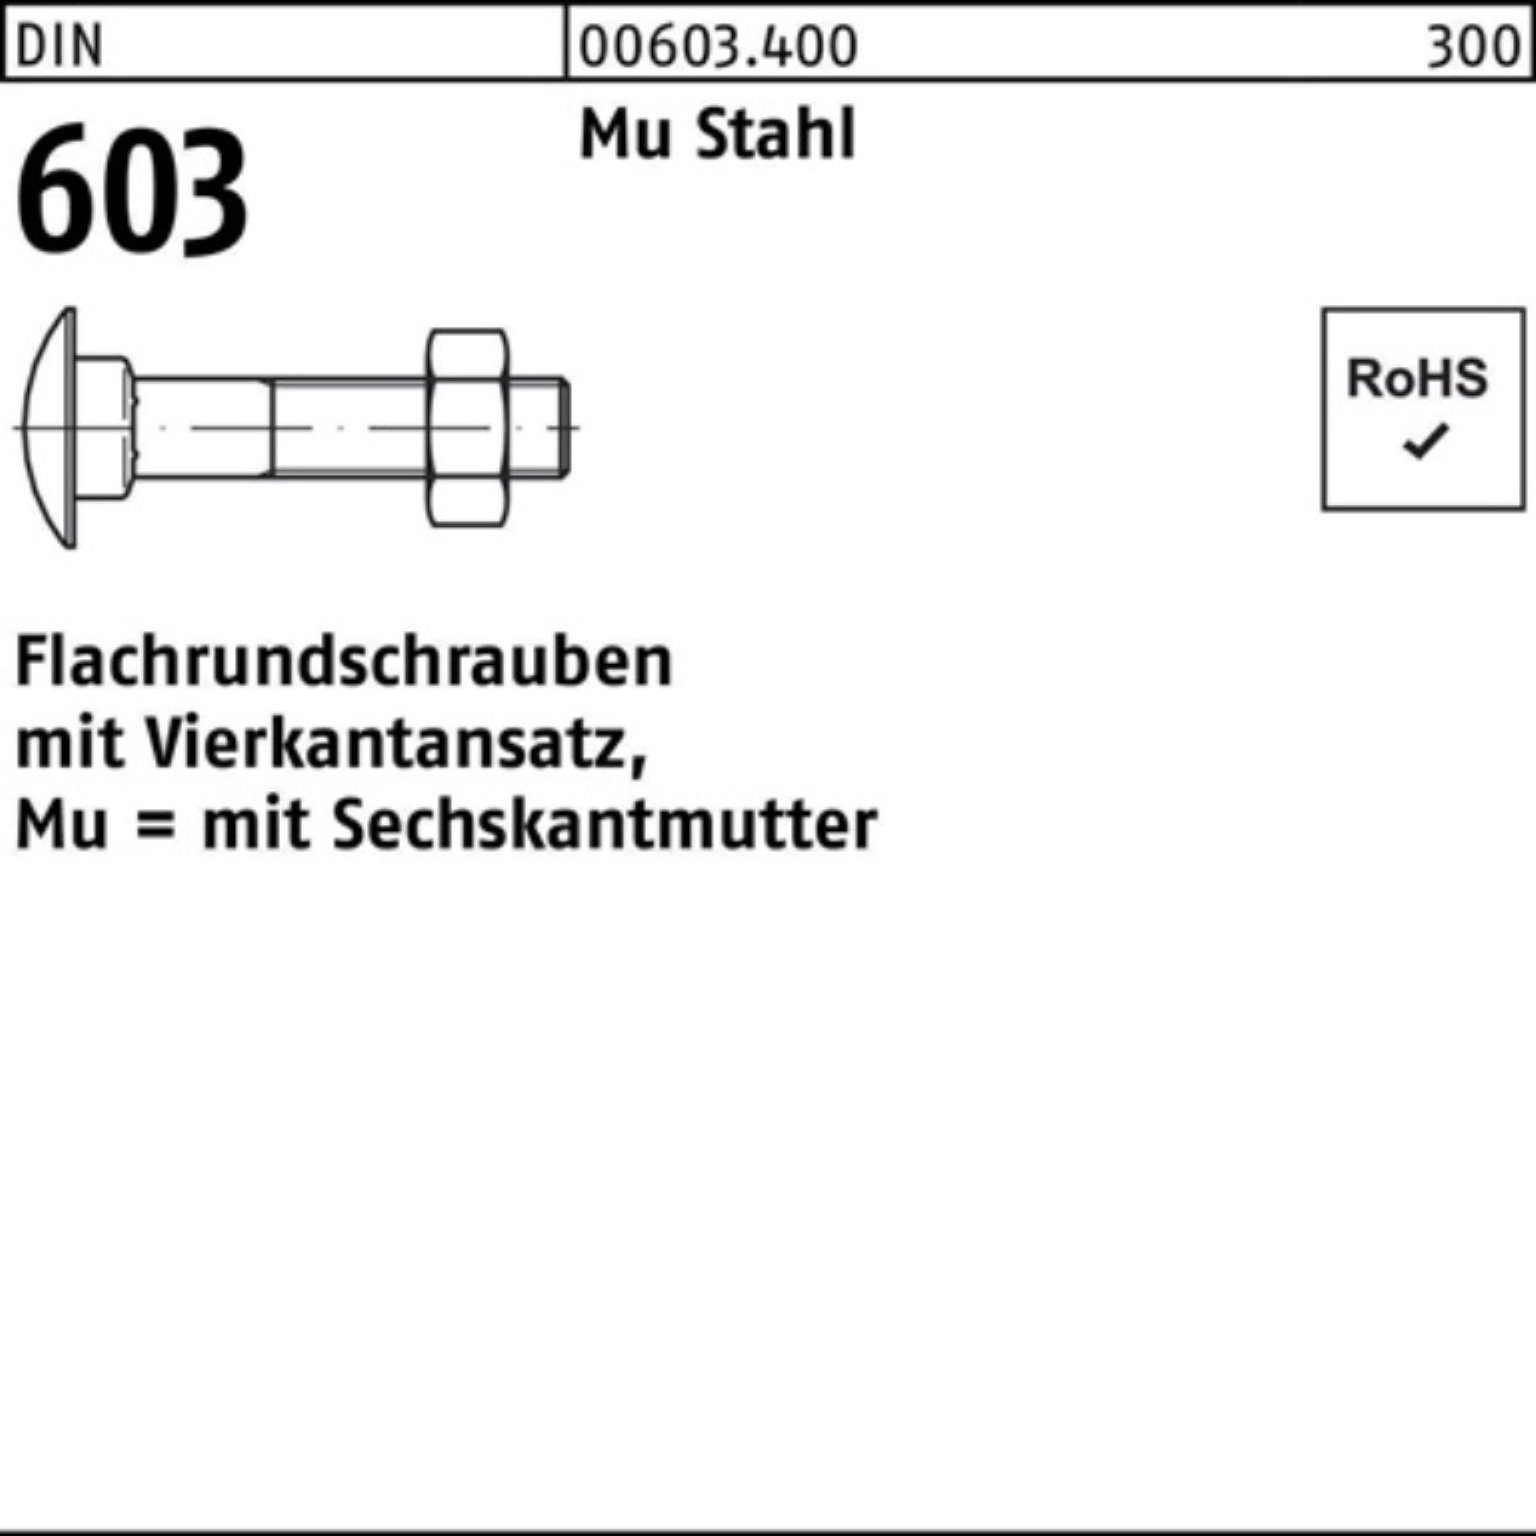 Reyher Schraube 200er M6x80 Pack Vierkantansatz/6-ktmutter M DIN 603 Flachrundschraube